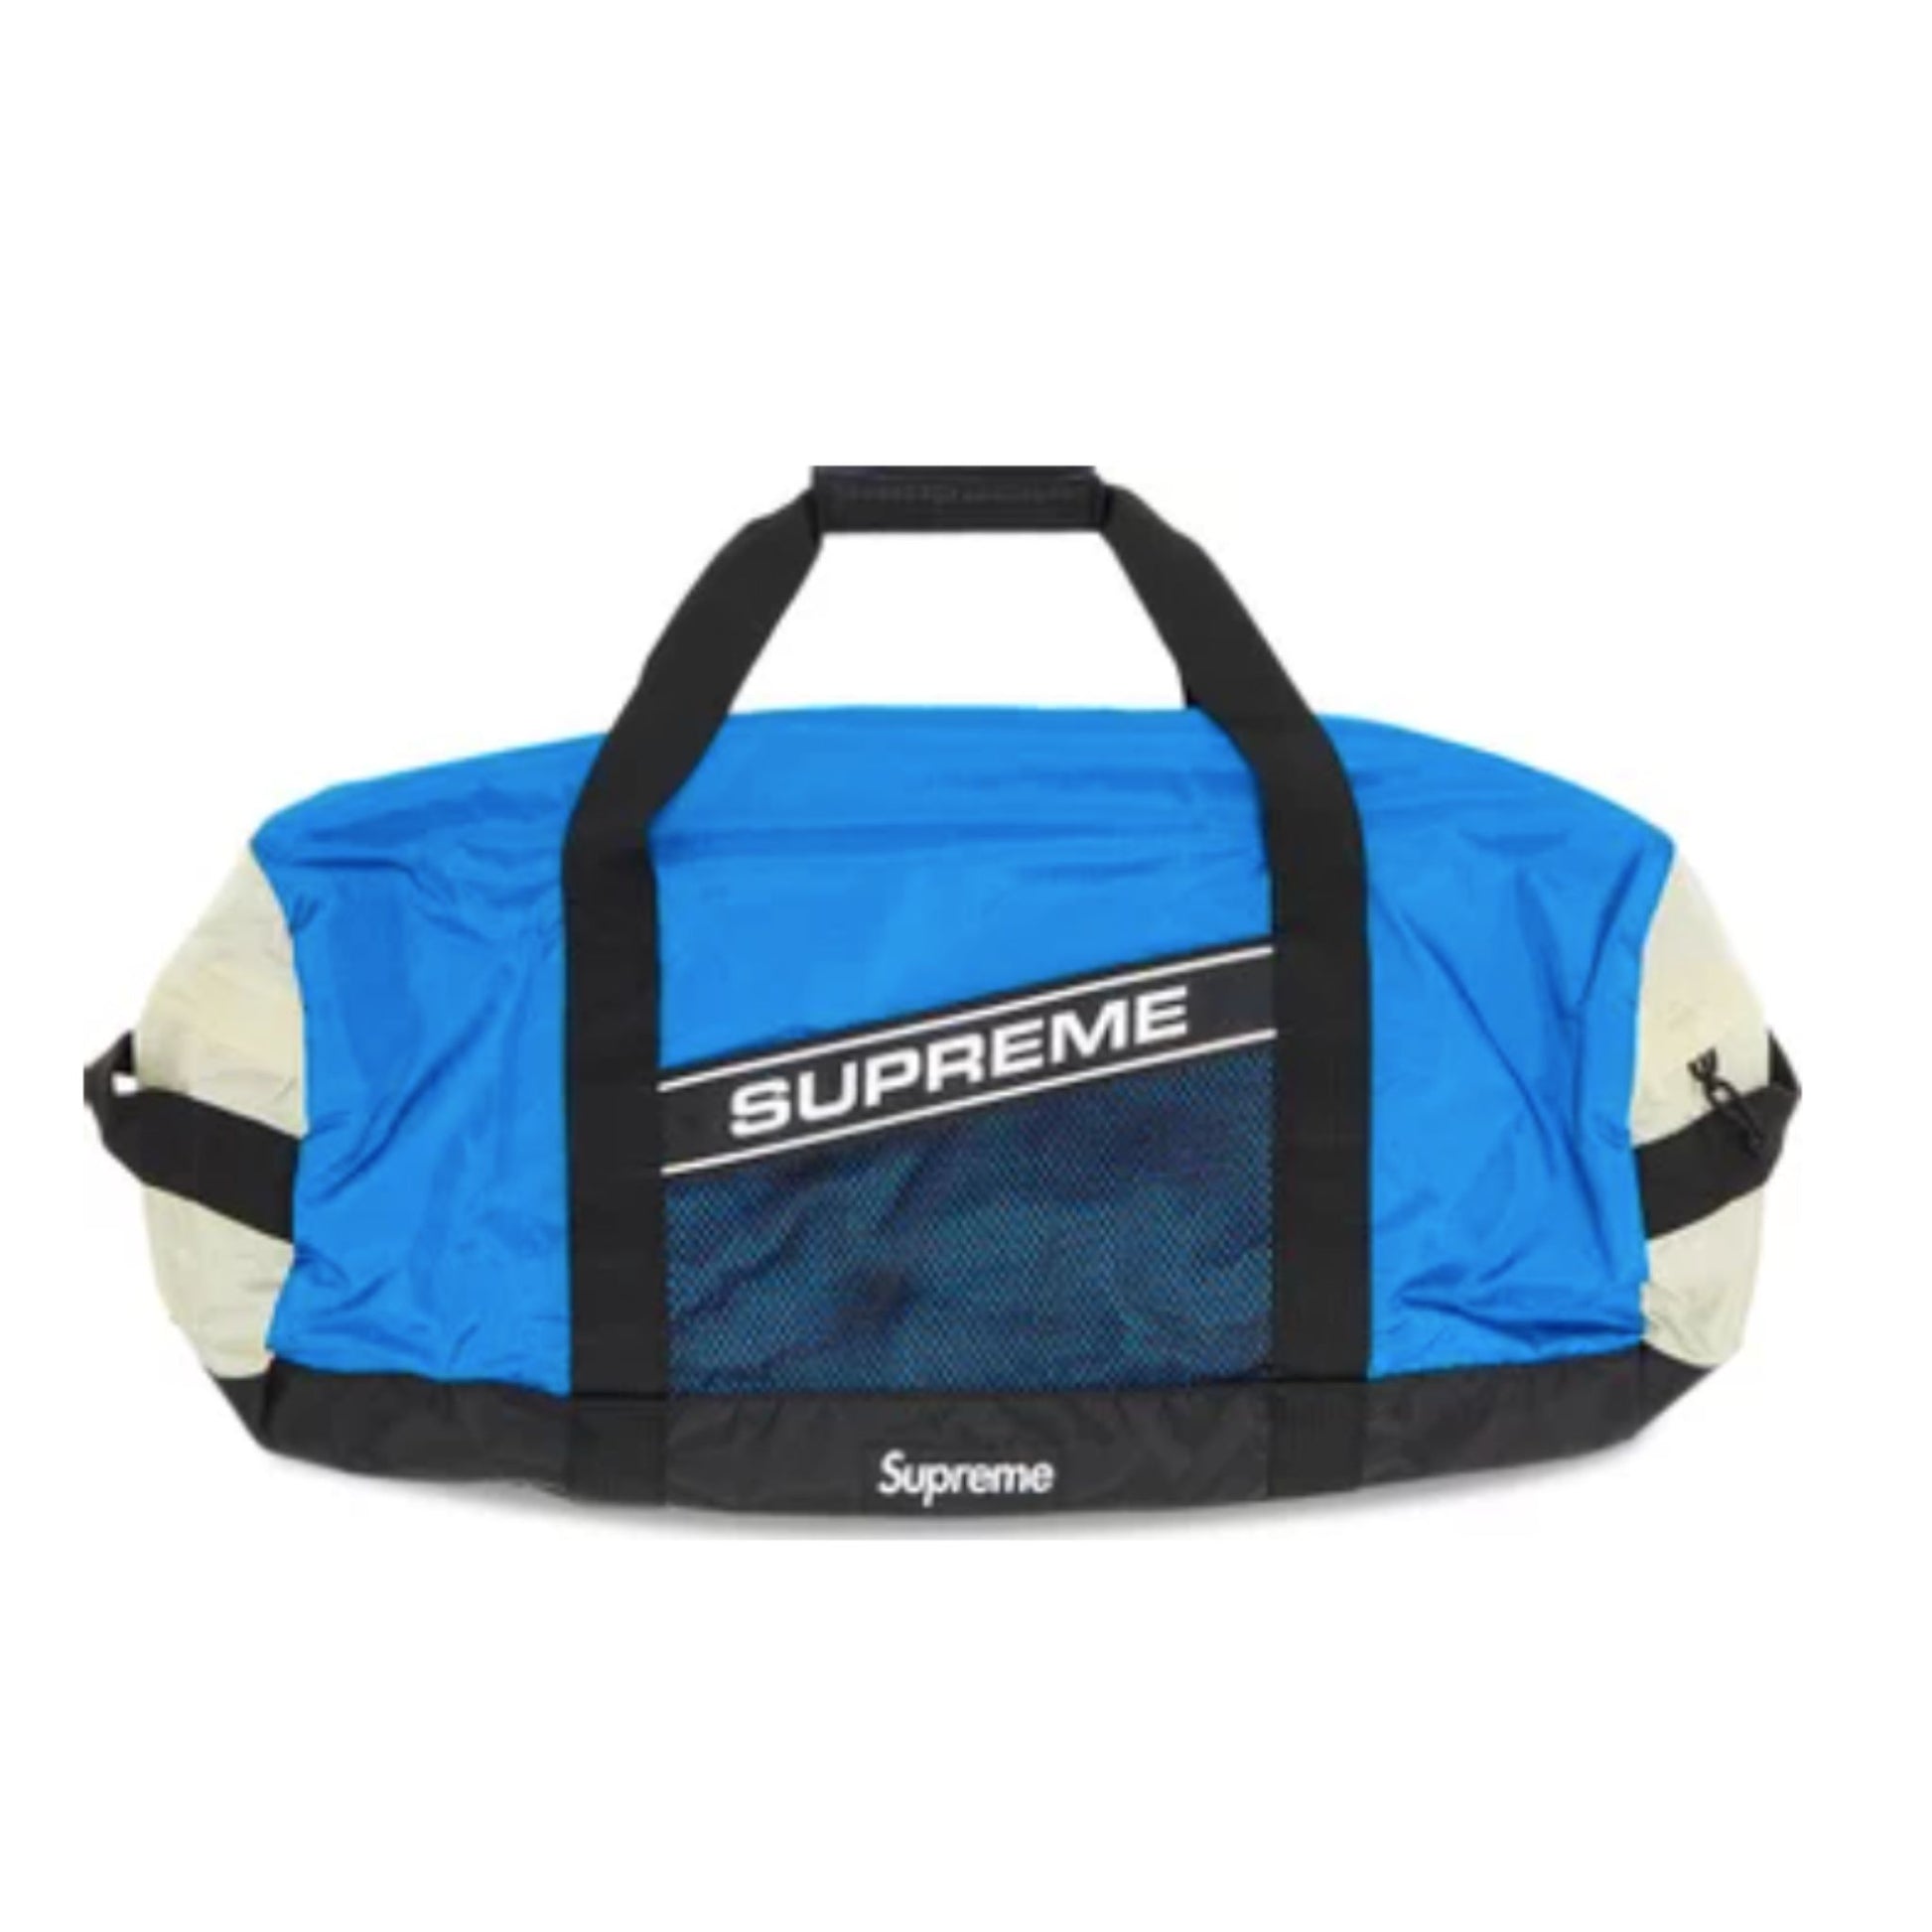 Supreme Supreme Duffle Bag